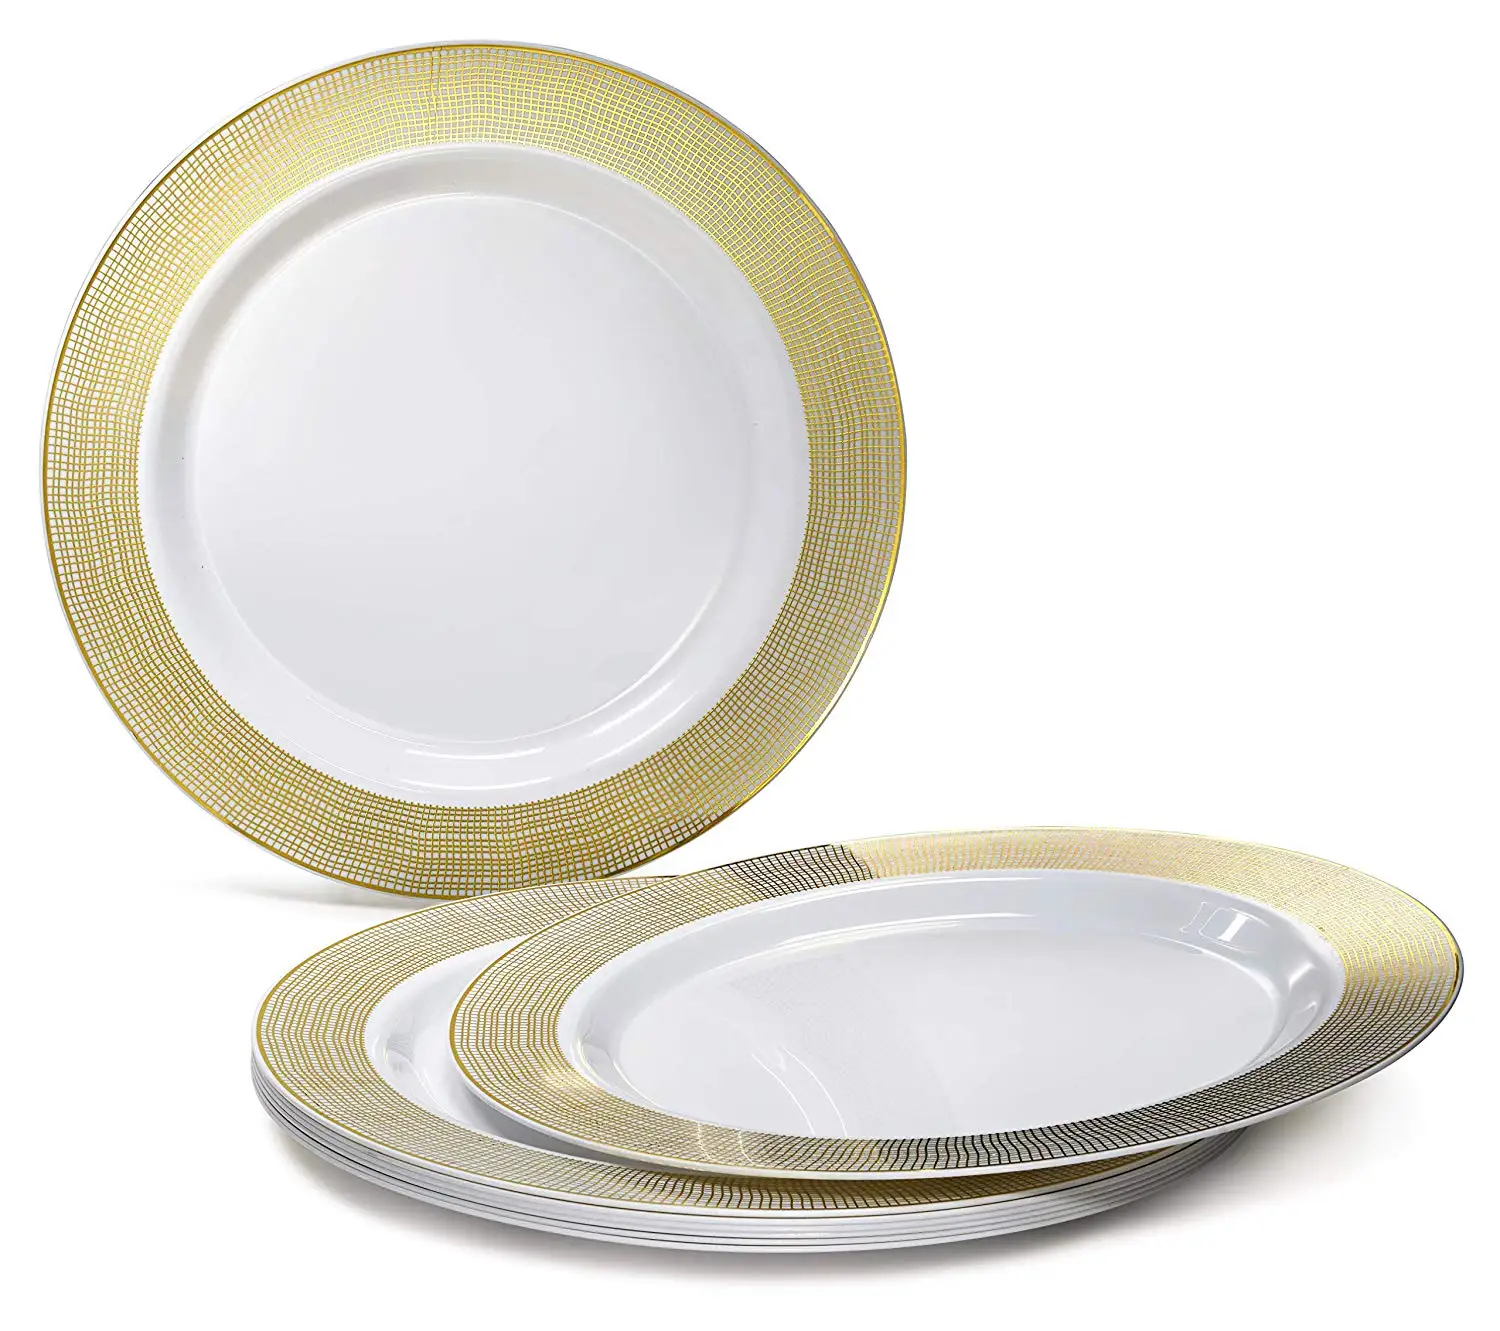 Elegant Disposable Wedding Plates - Buy Plastic Dinner Plates For Weddings,Dinner Plates For Weddings Gold,Wedding Disposable Dinner Plate Product on Alibaba.com